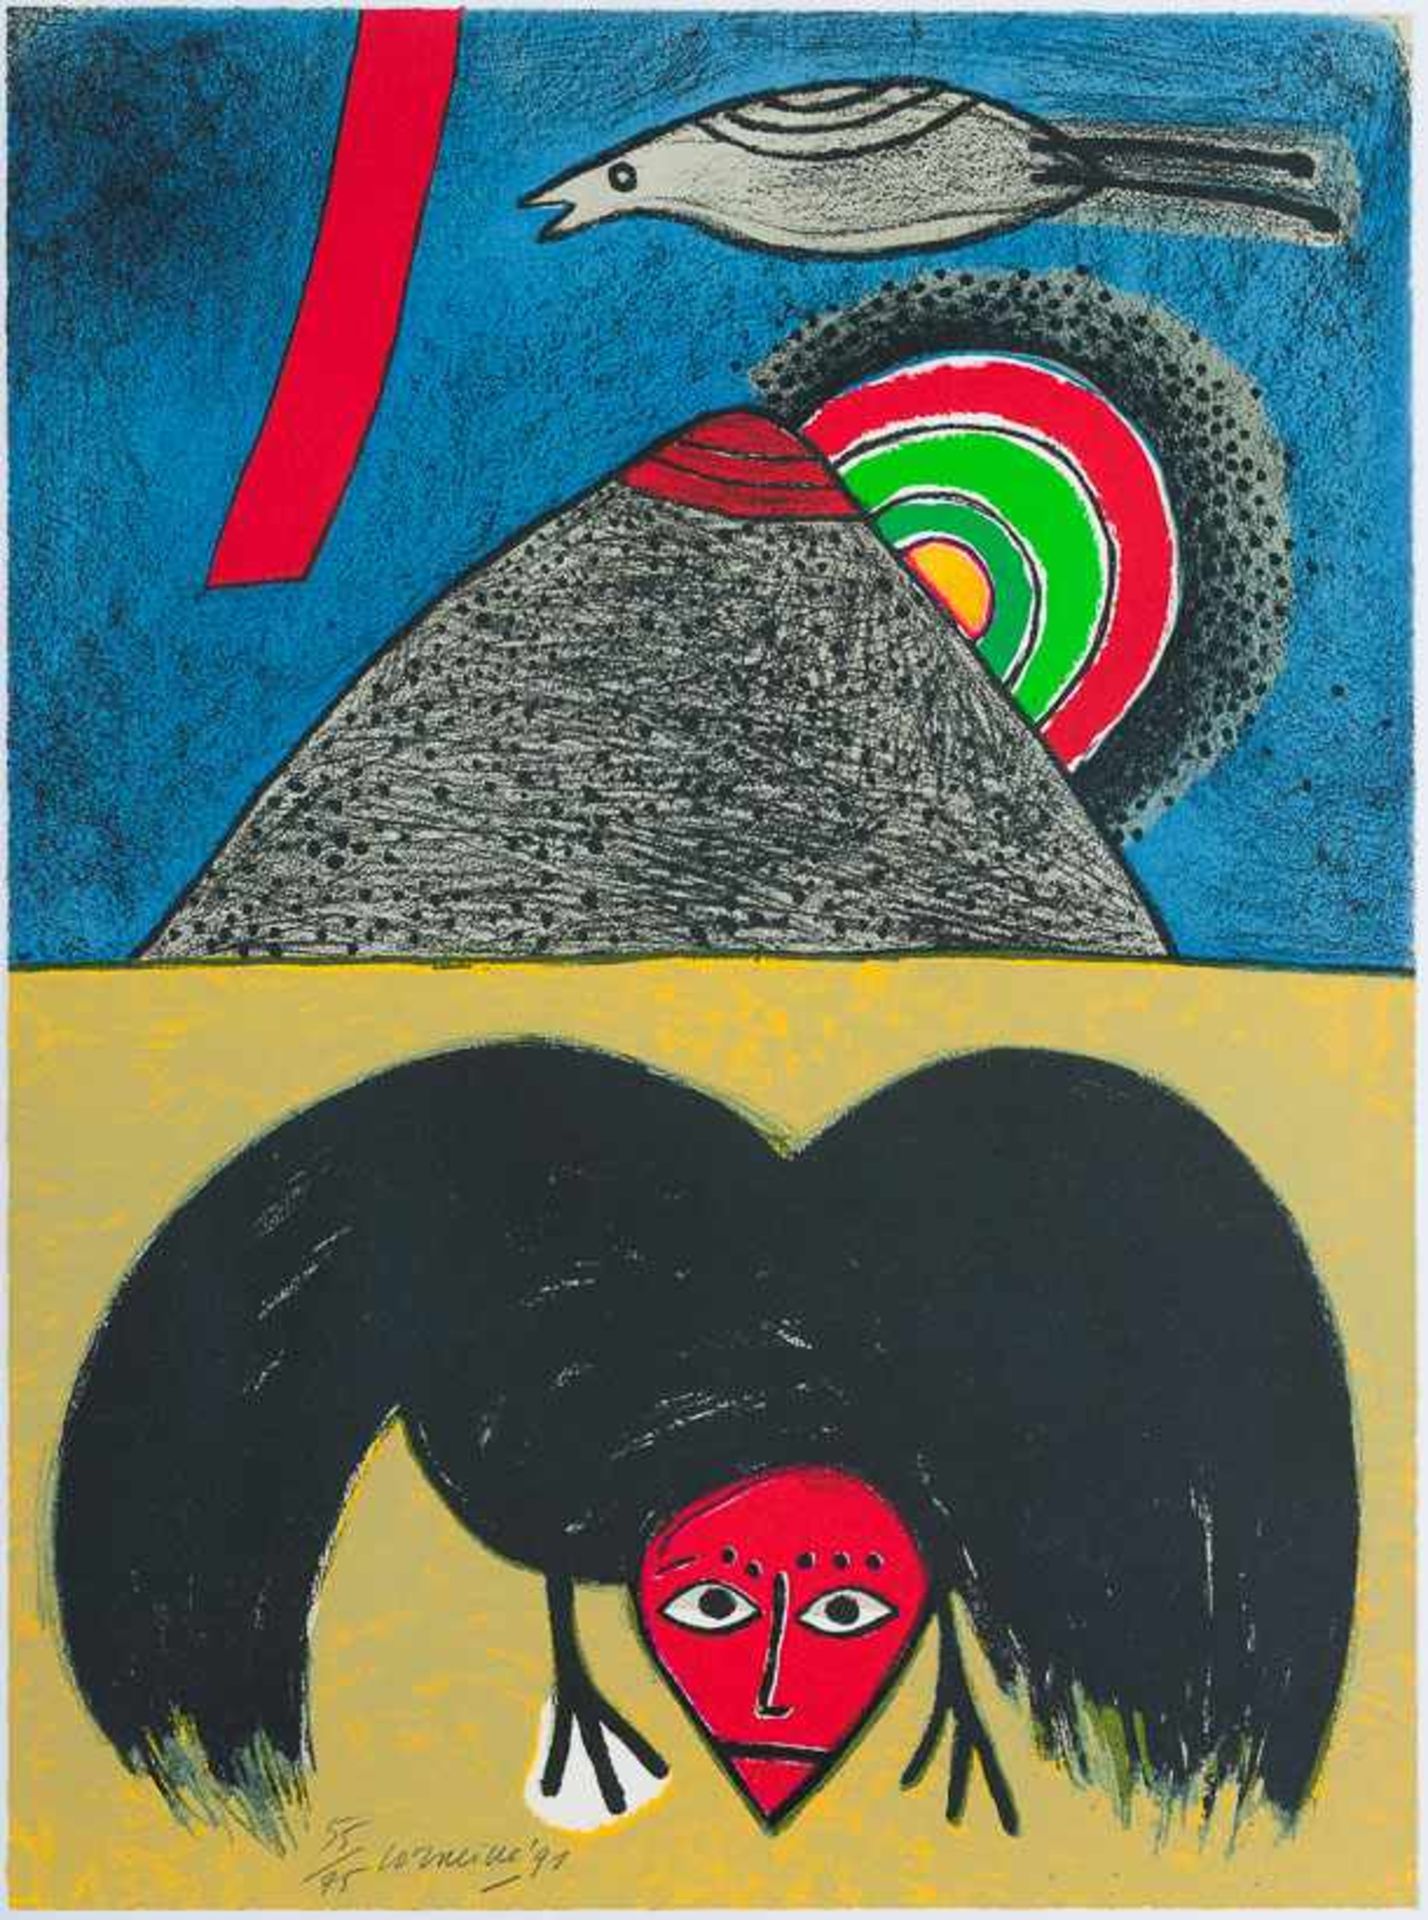 Derselbe "Oiseau et Pyramide", 1991. Farblithographie. Bleistift sign., num. 55/75 u. dat. (19)91.